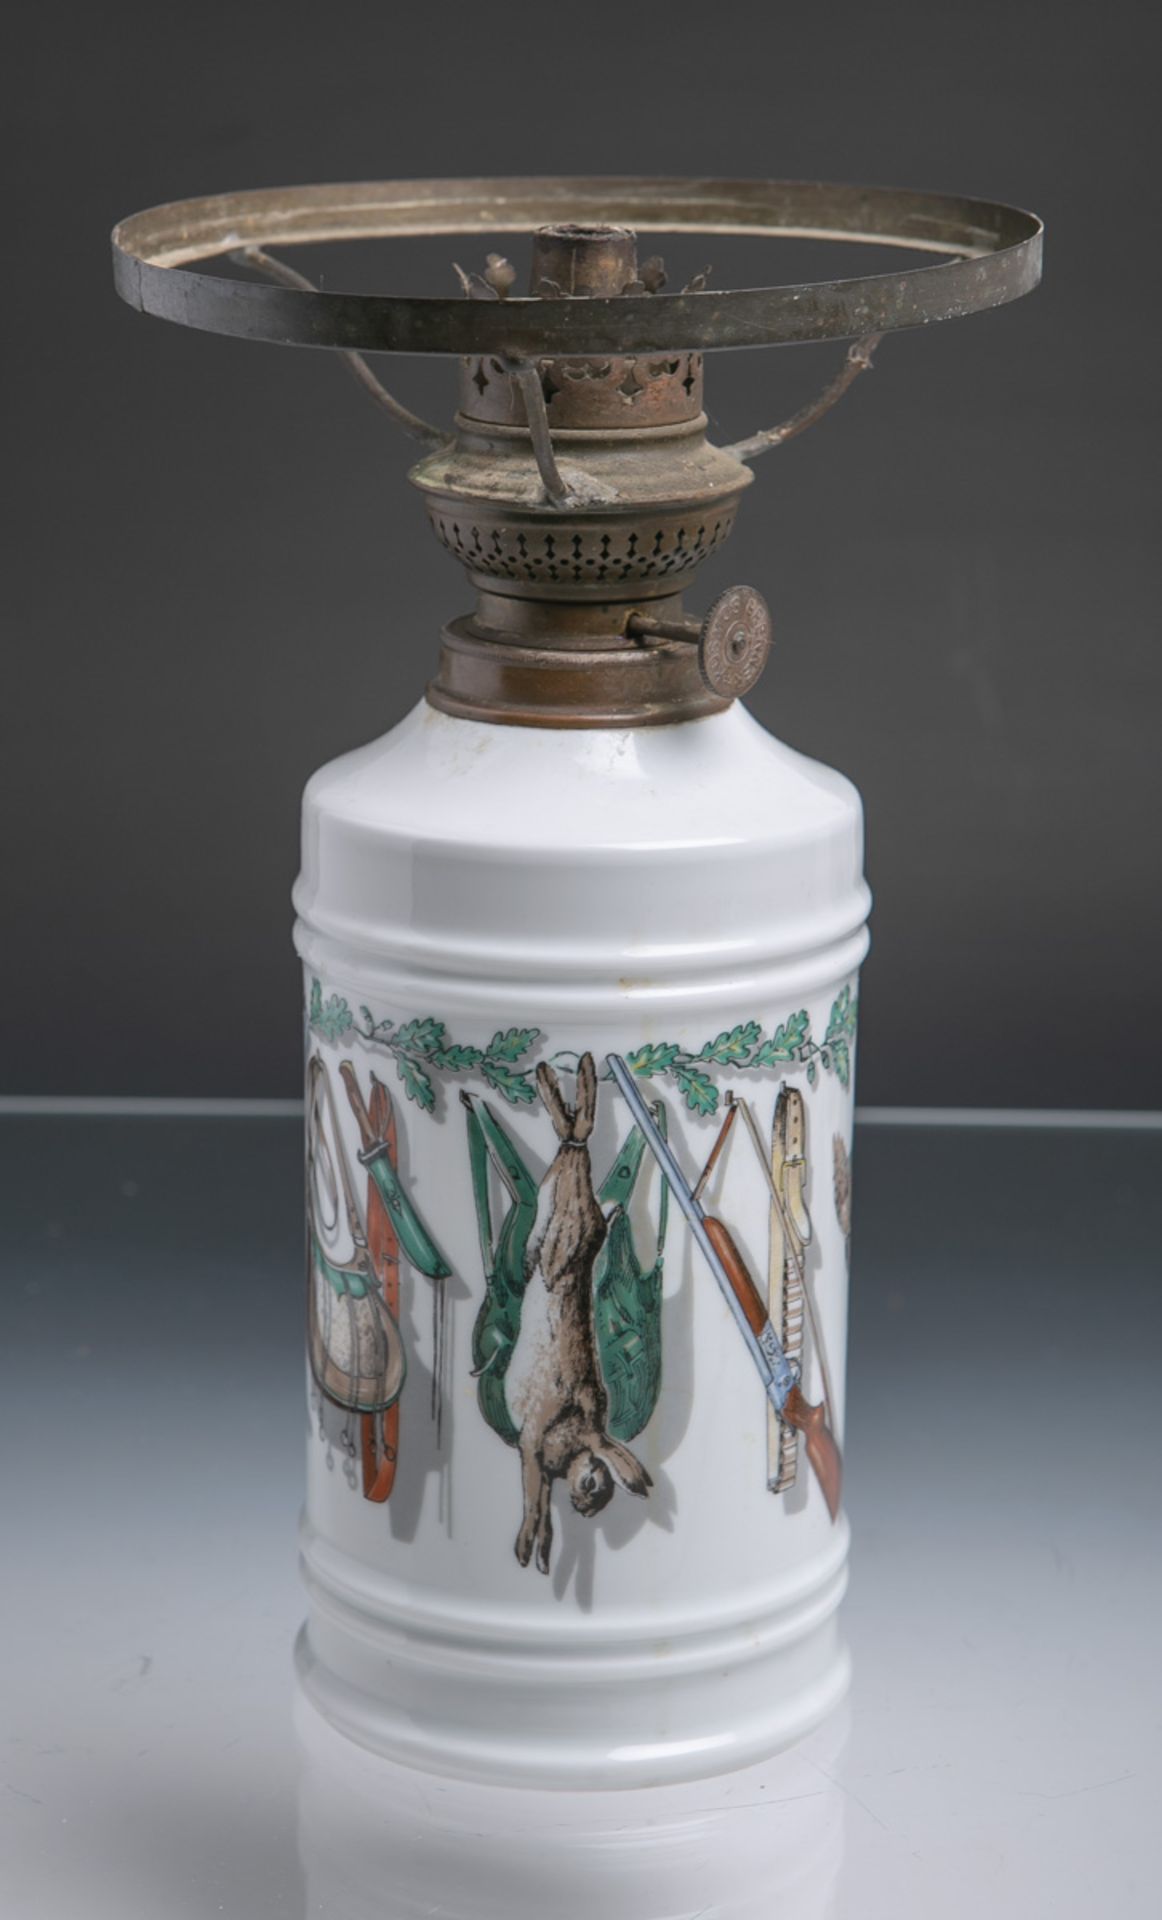 Petroliumlampe aus Porzellan m. Jagdmotiven (Alboth u. Kaiser Bavaria, Alka-Kunst)